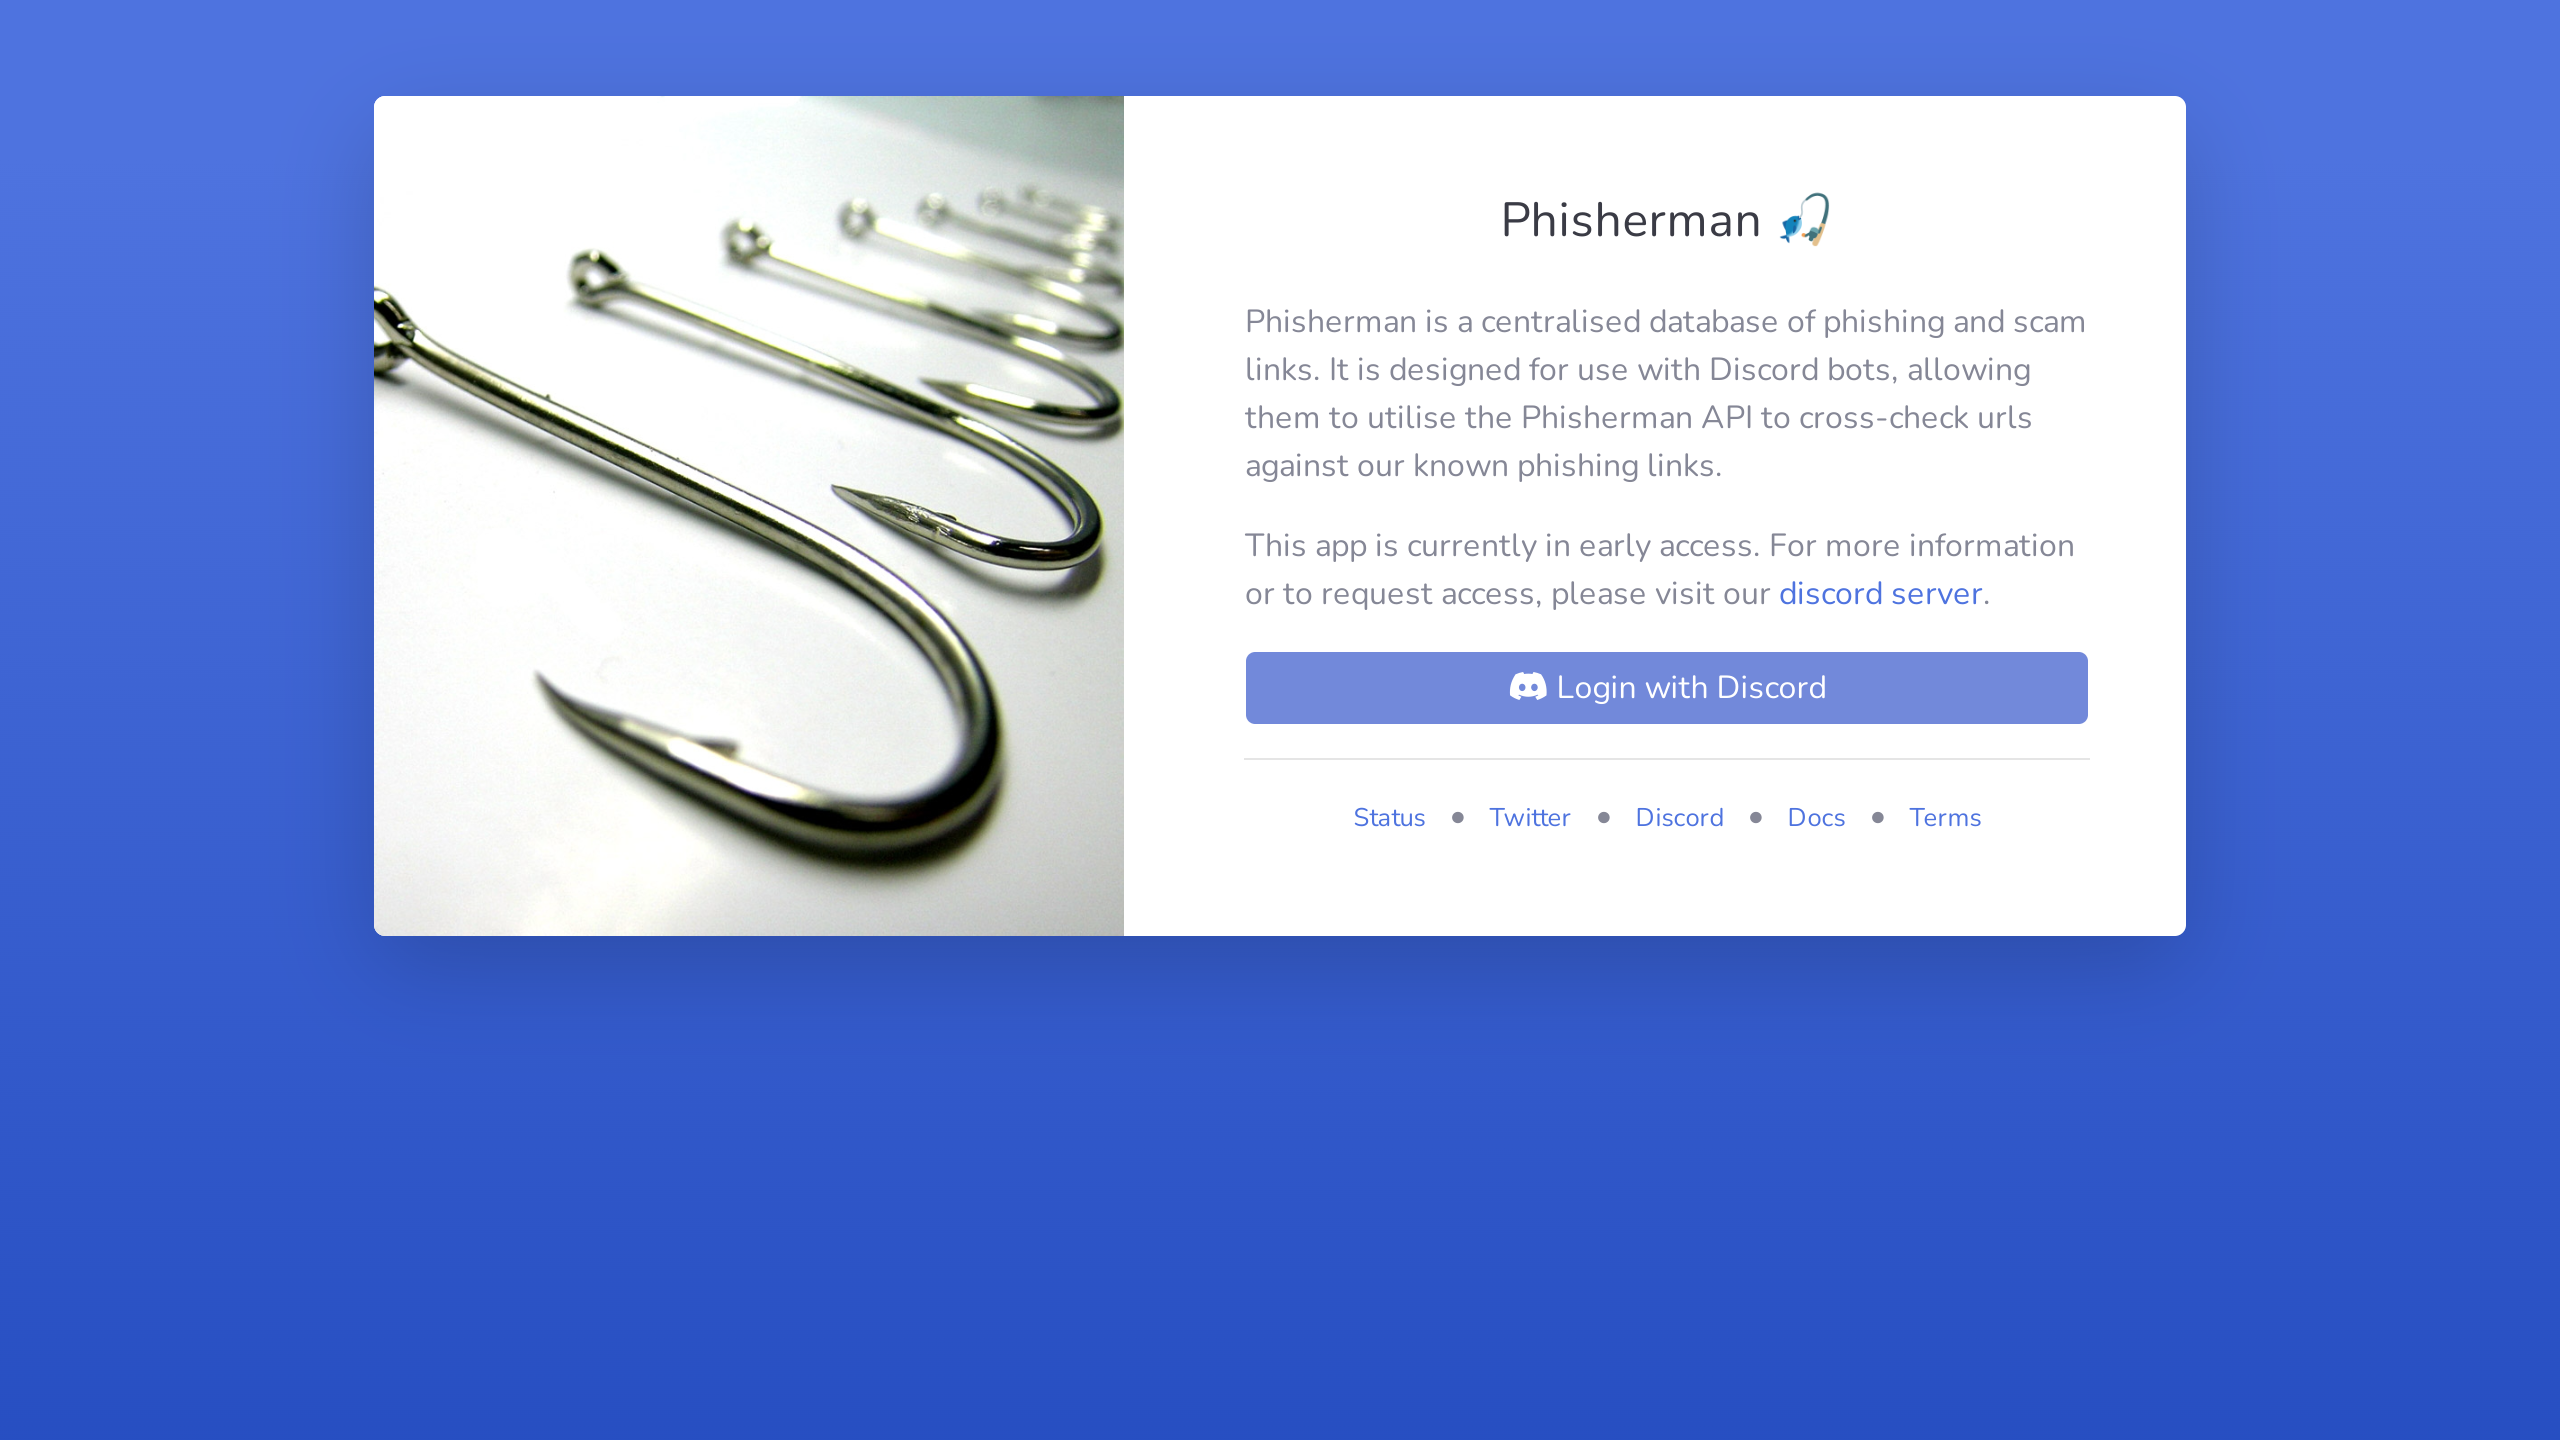 Phisherman's website screenshot